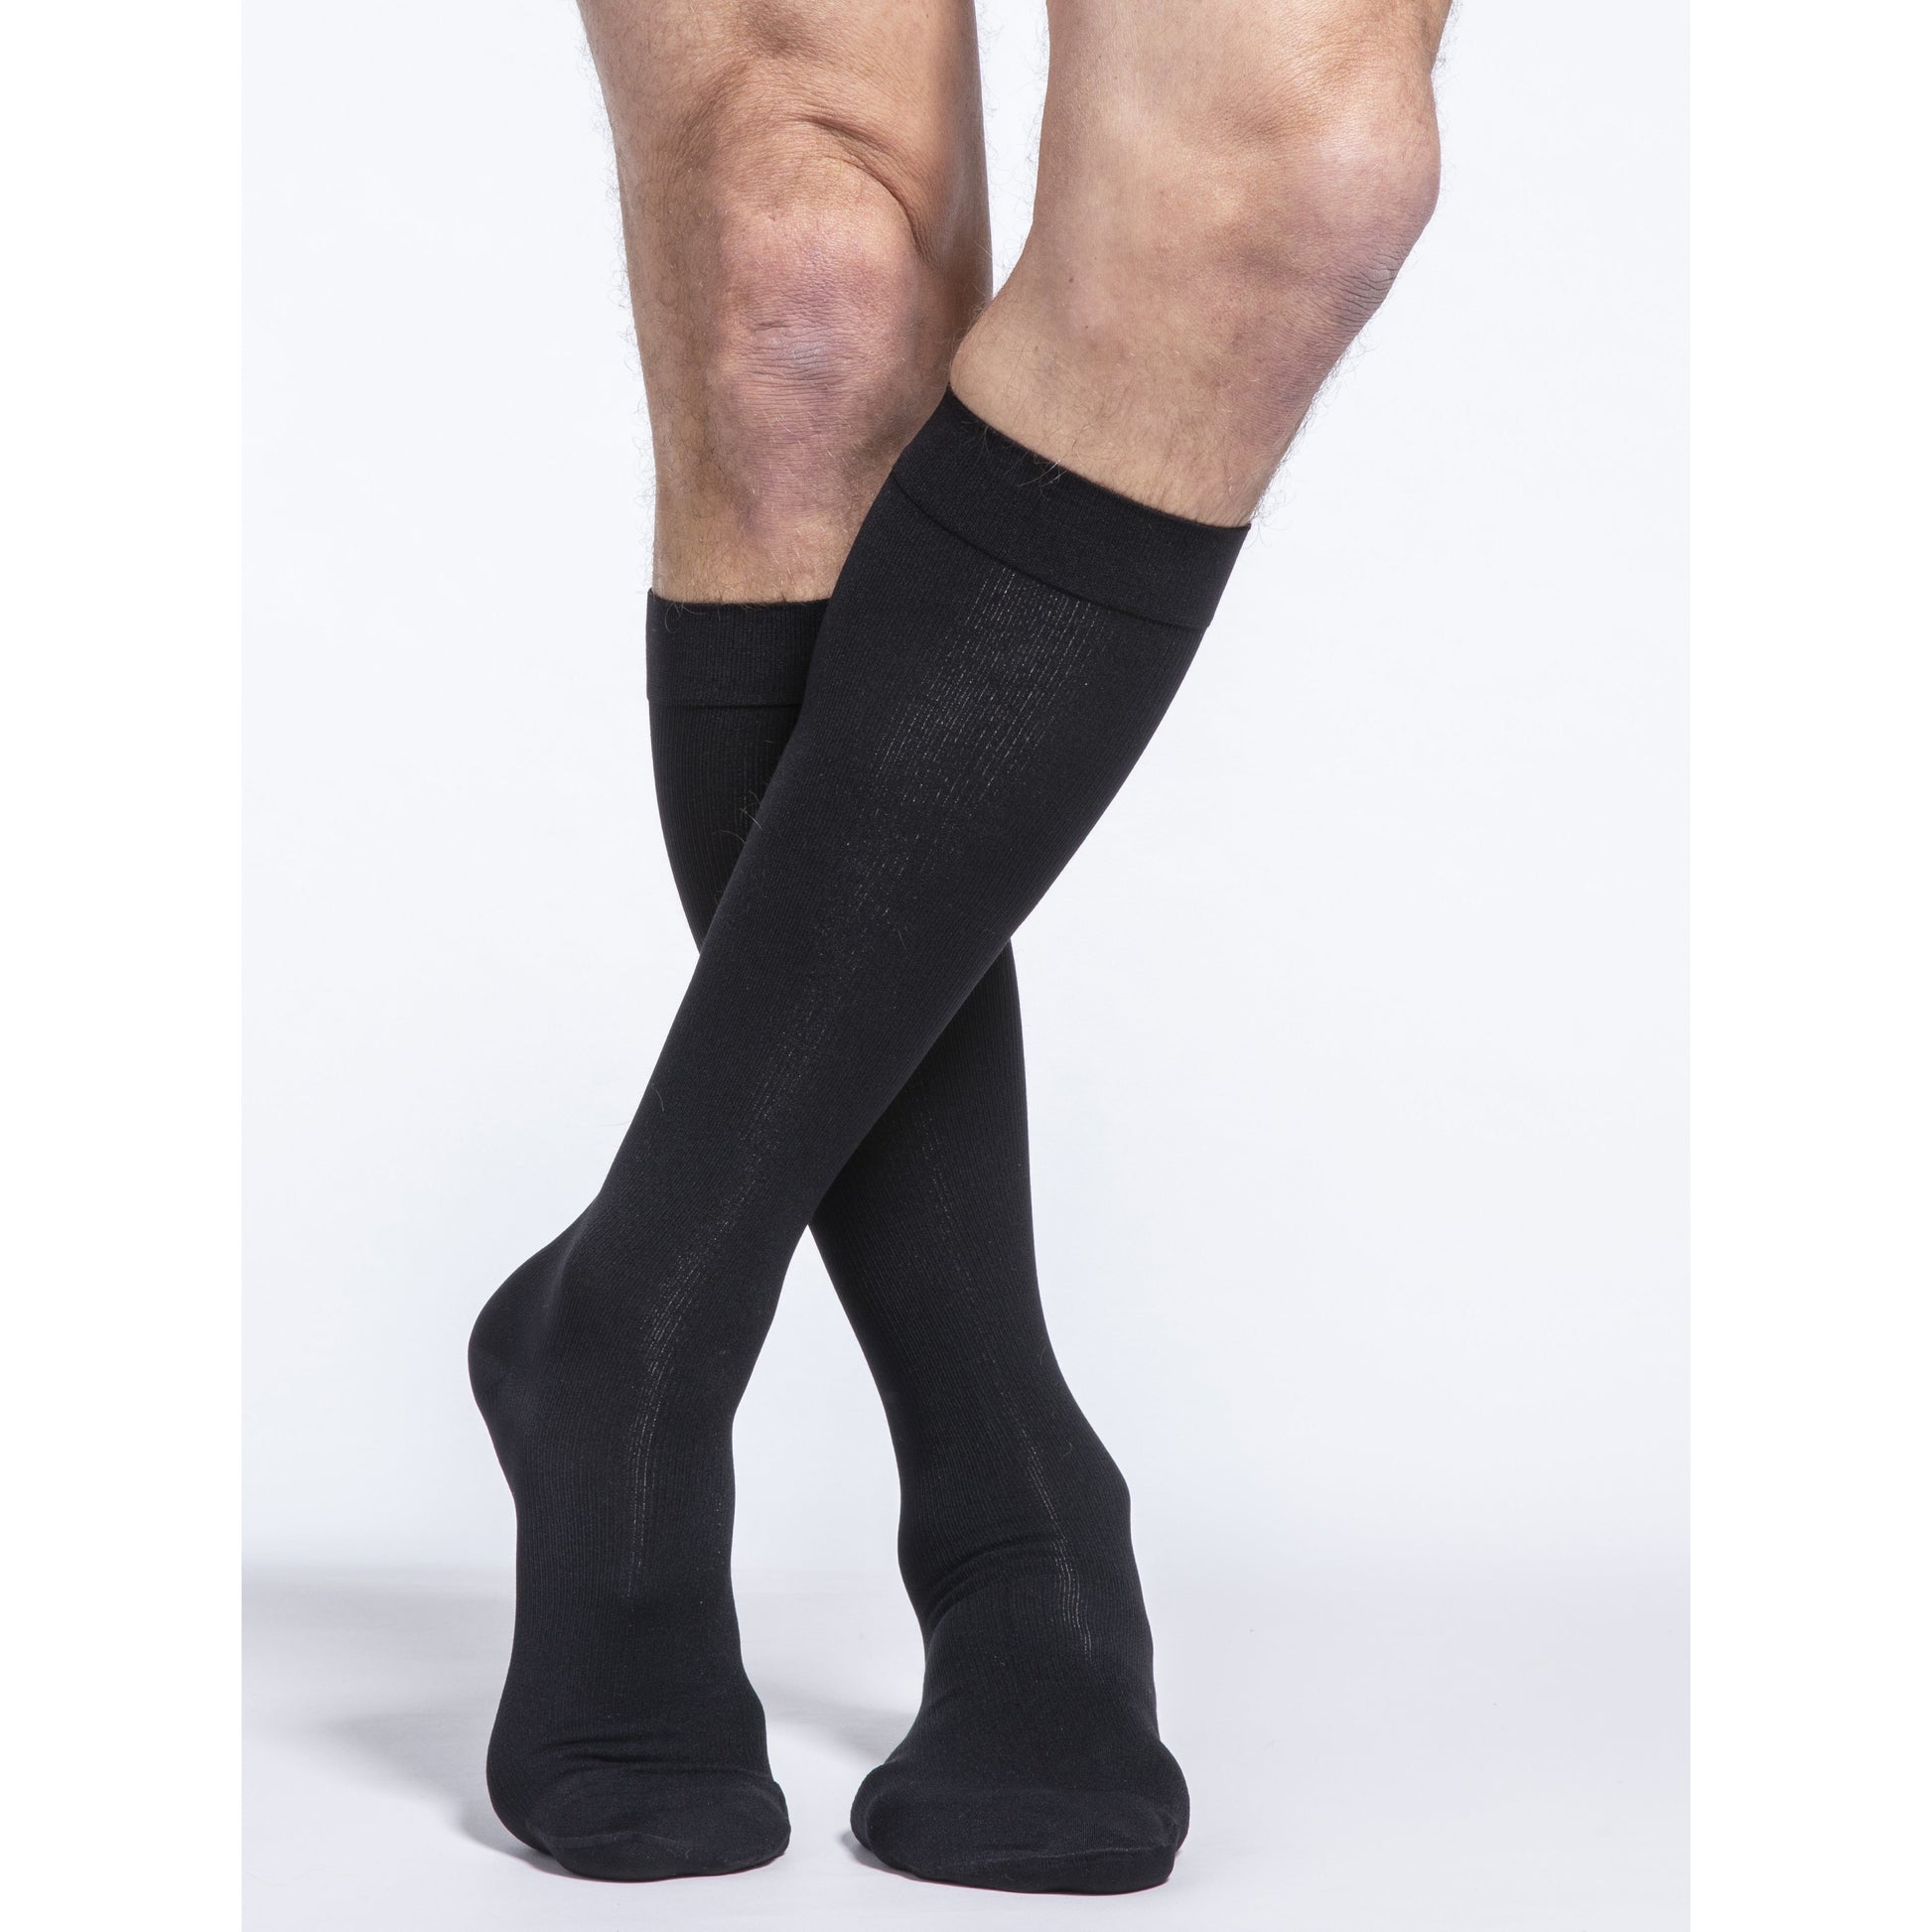 Sigvaris Cotton Men's 20-30 mmHg Knee w/ Silicone Band Grip Top, Black